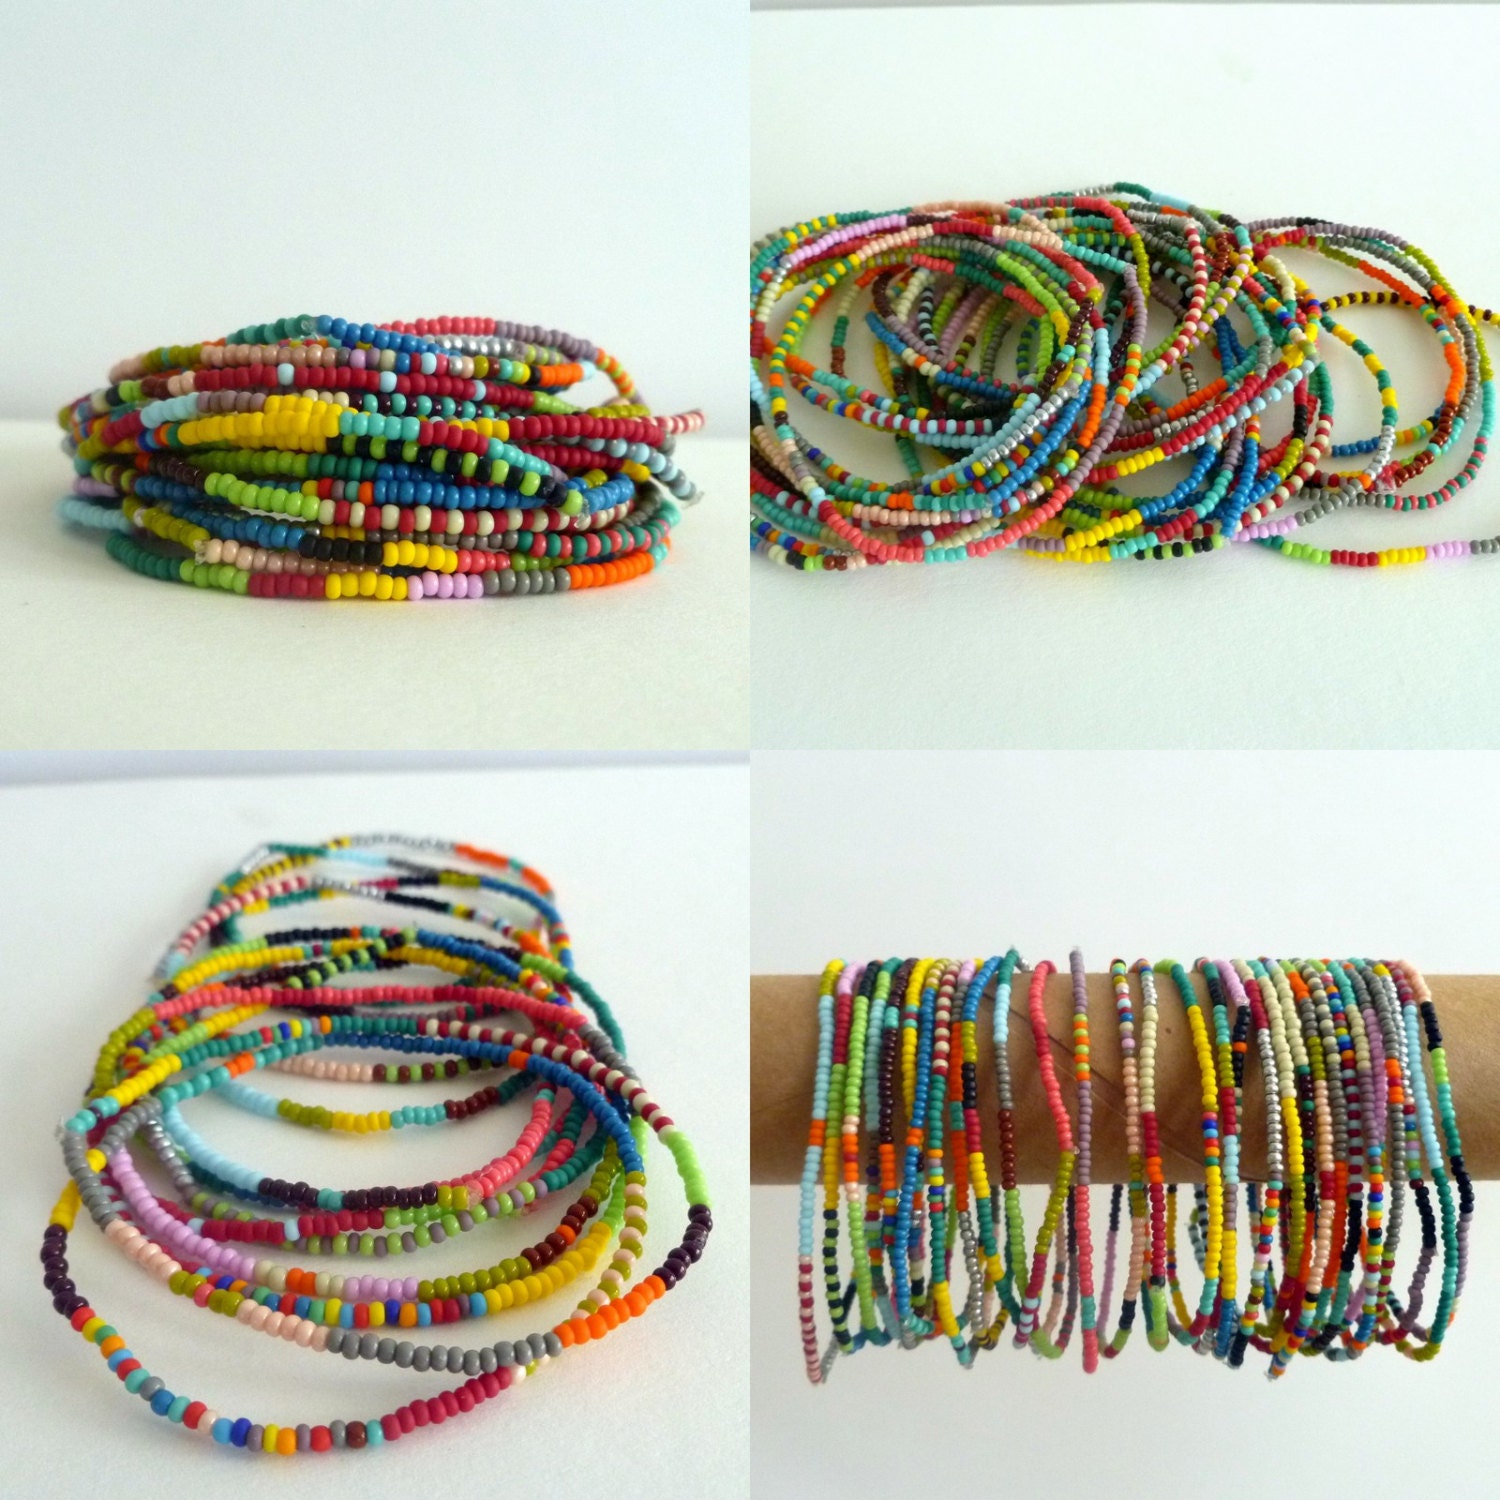 DIY 3 The SIMPLEST Single Strand Friendship Bracelets You Can Make -  YouTube | Adjustable bracelet diy, Cord bracelet diy, Knot bracelet diy